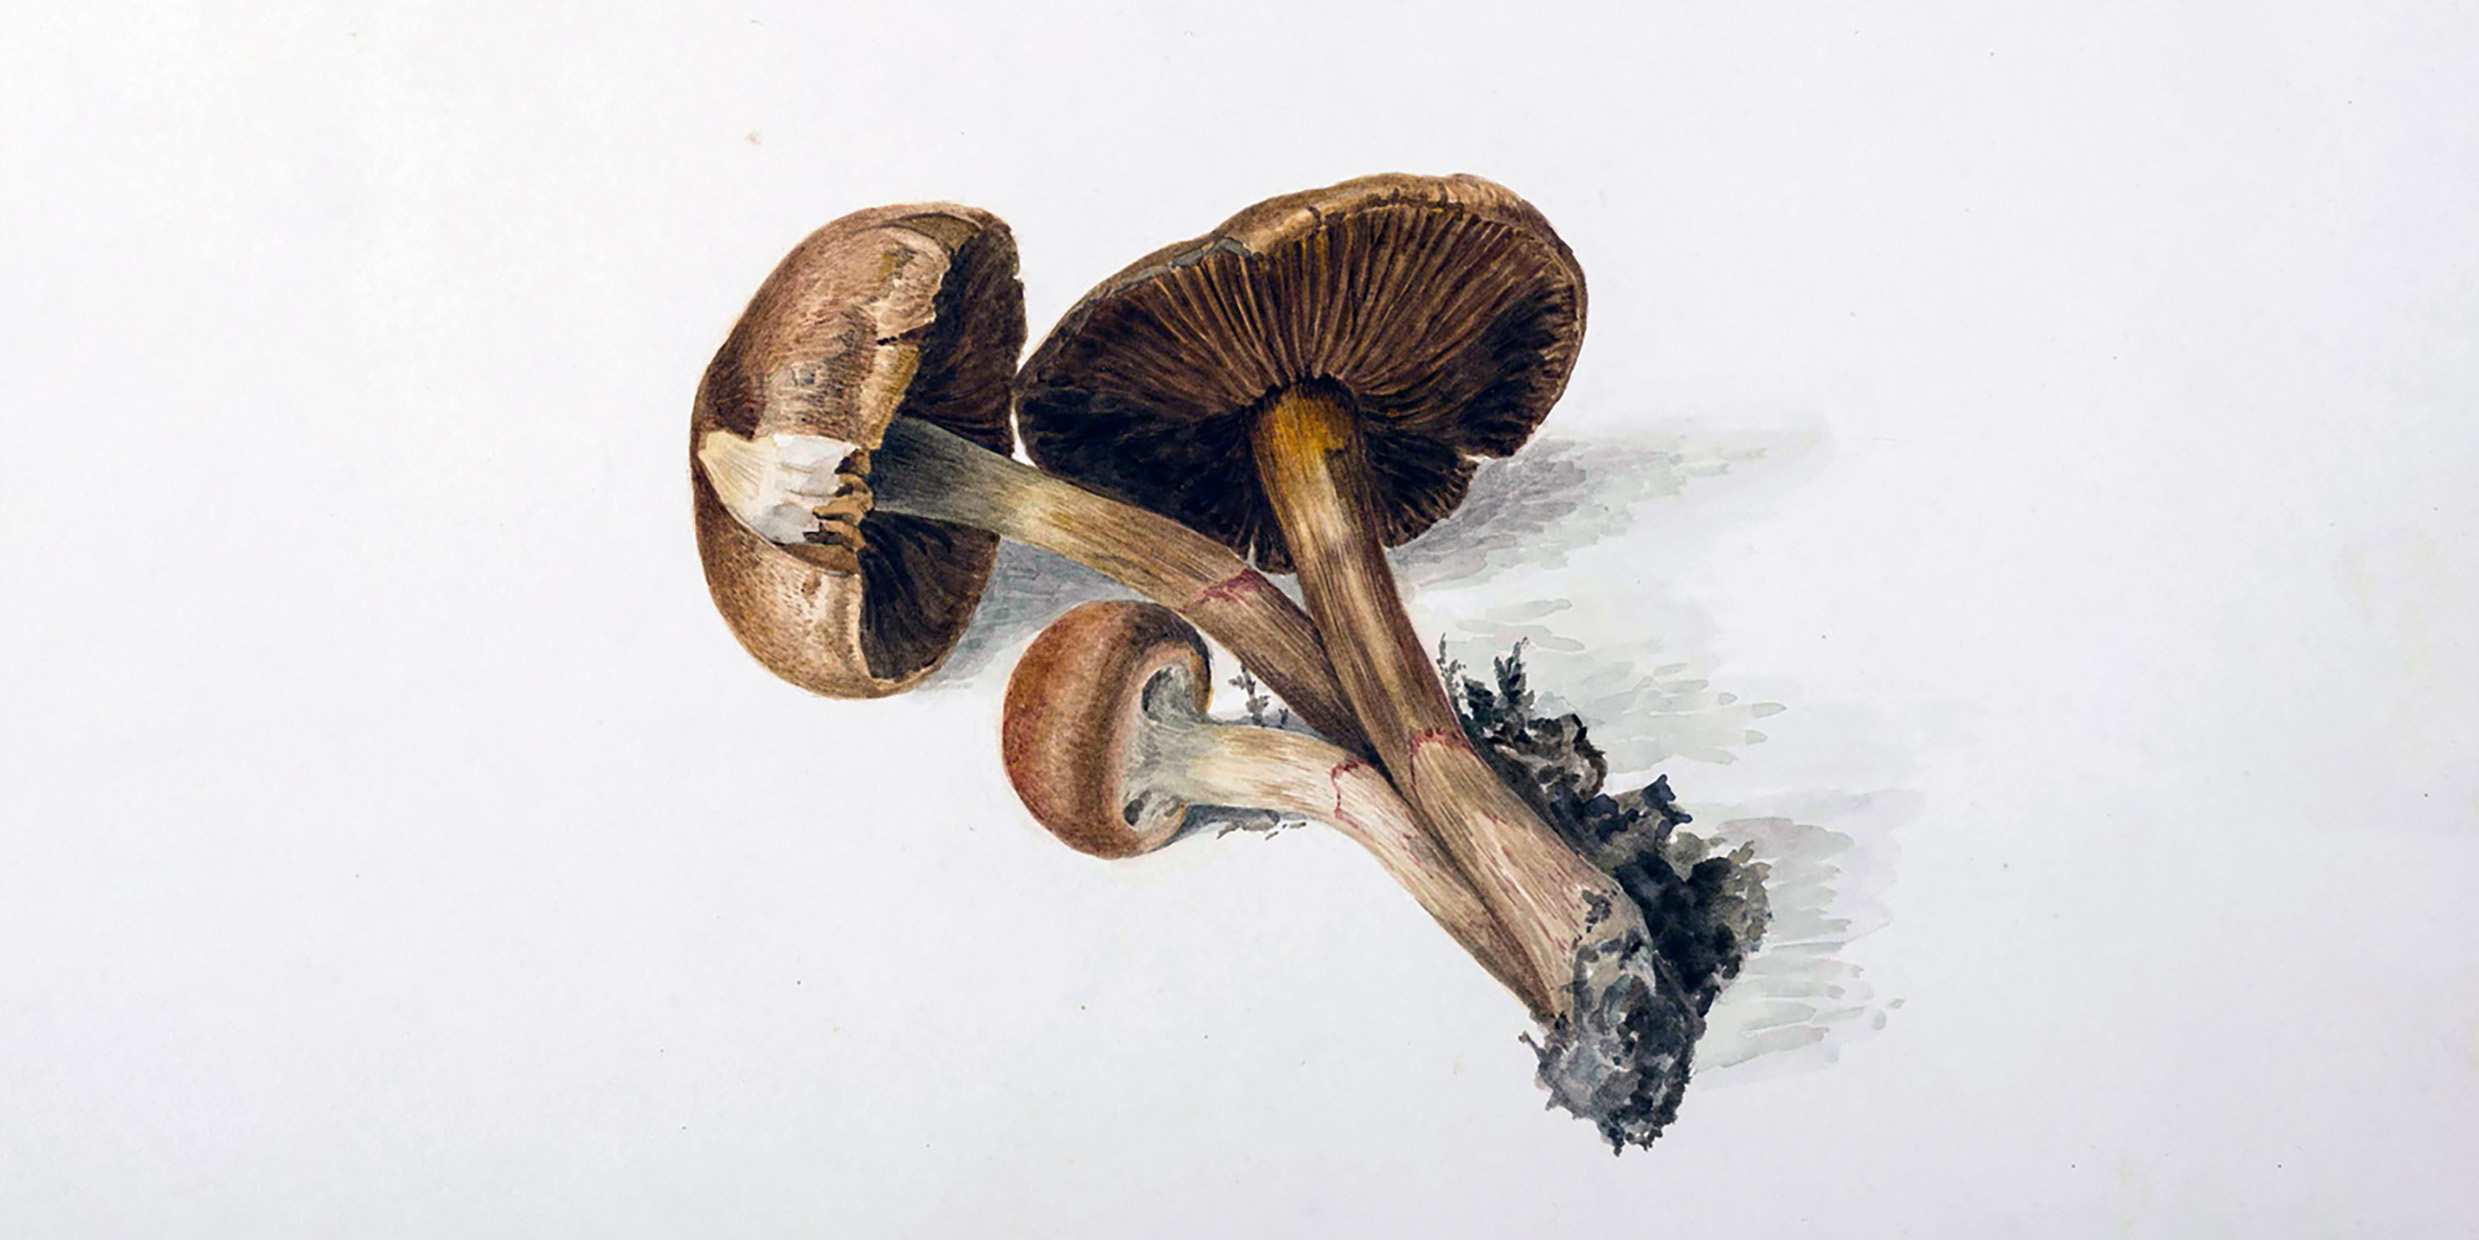 Watercolor illustration of mushrooms